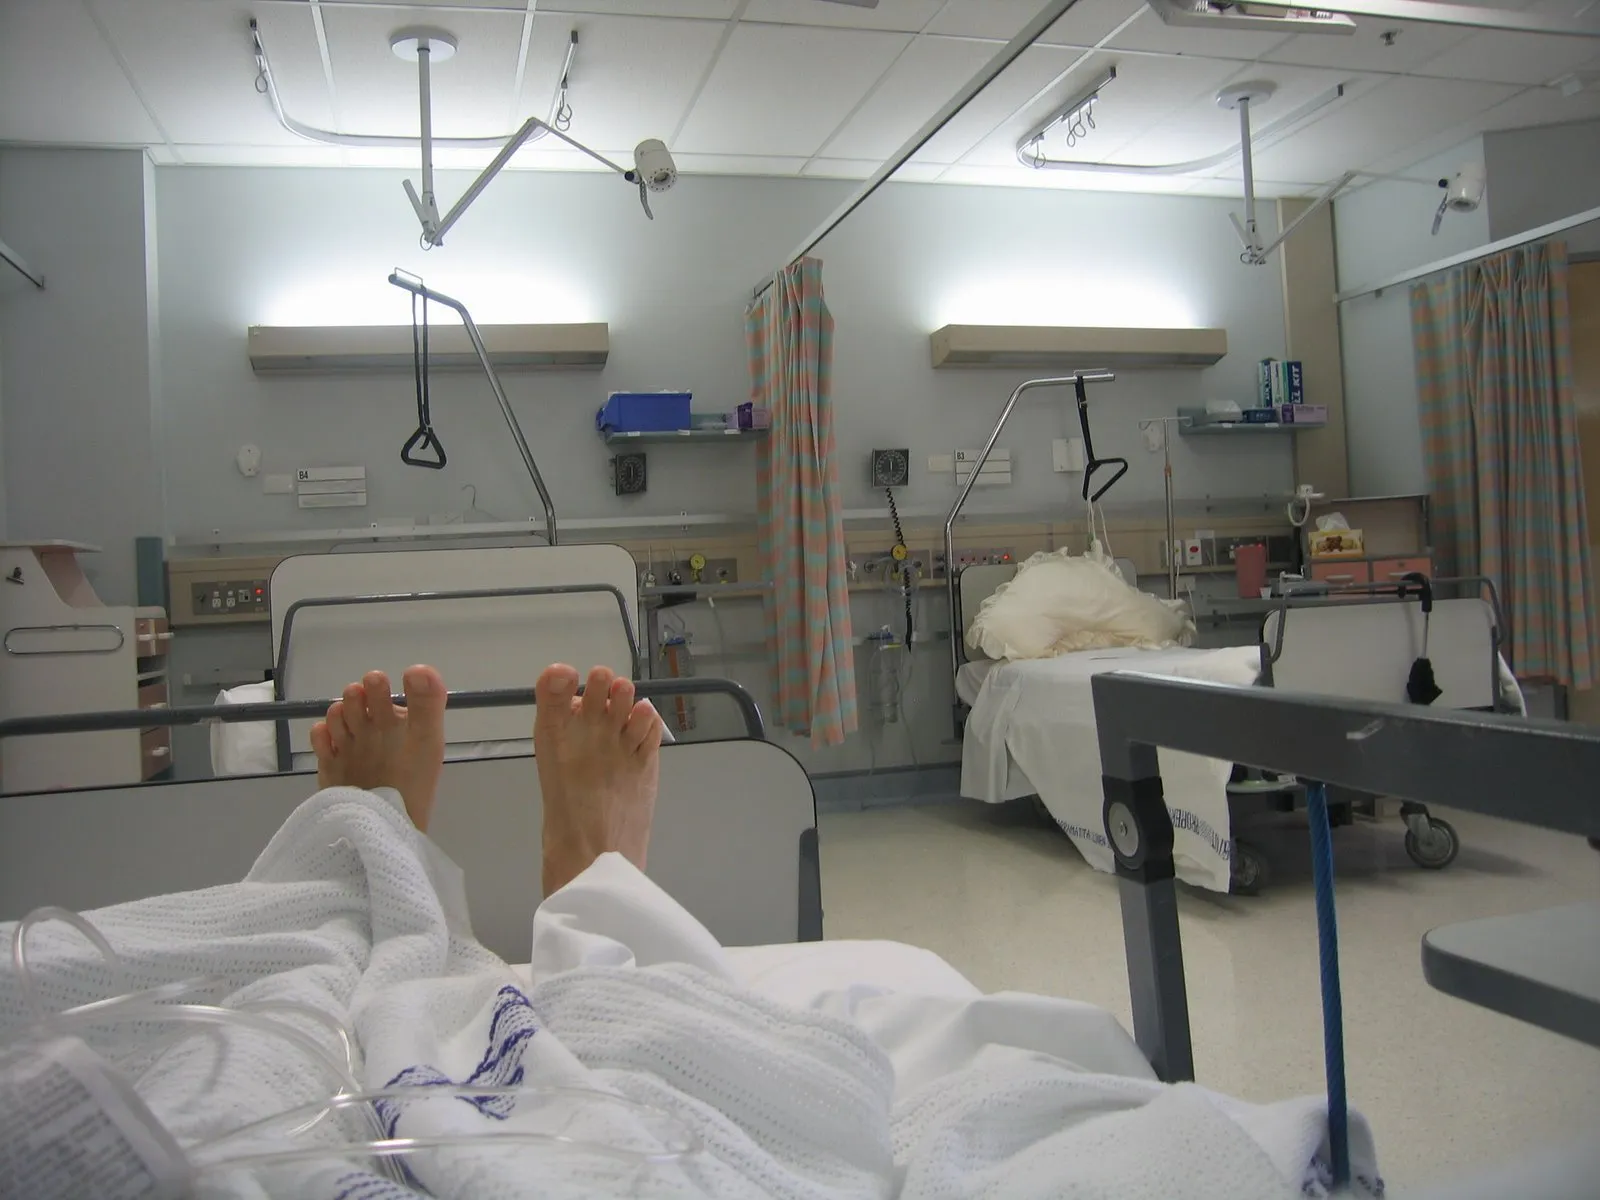 Обстановка ковид. Палата (Джон Карпентер, 2010). Больничная палата. Потолок больничной палаты.